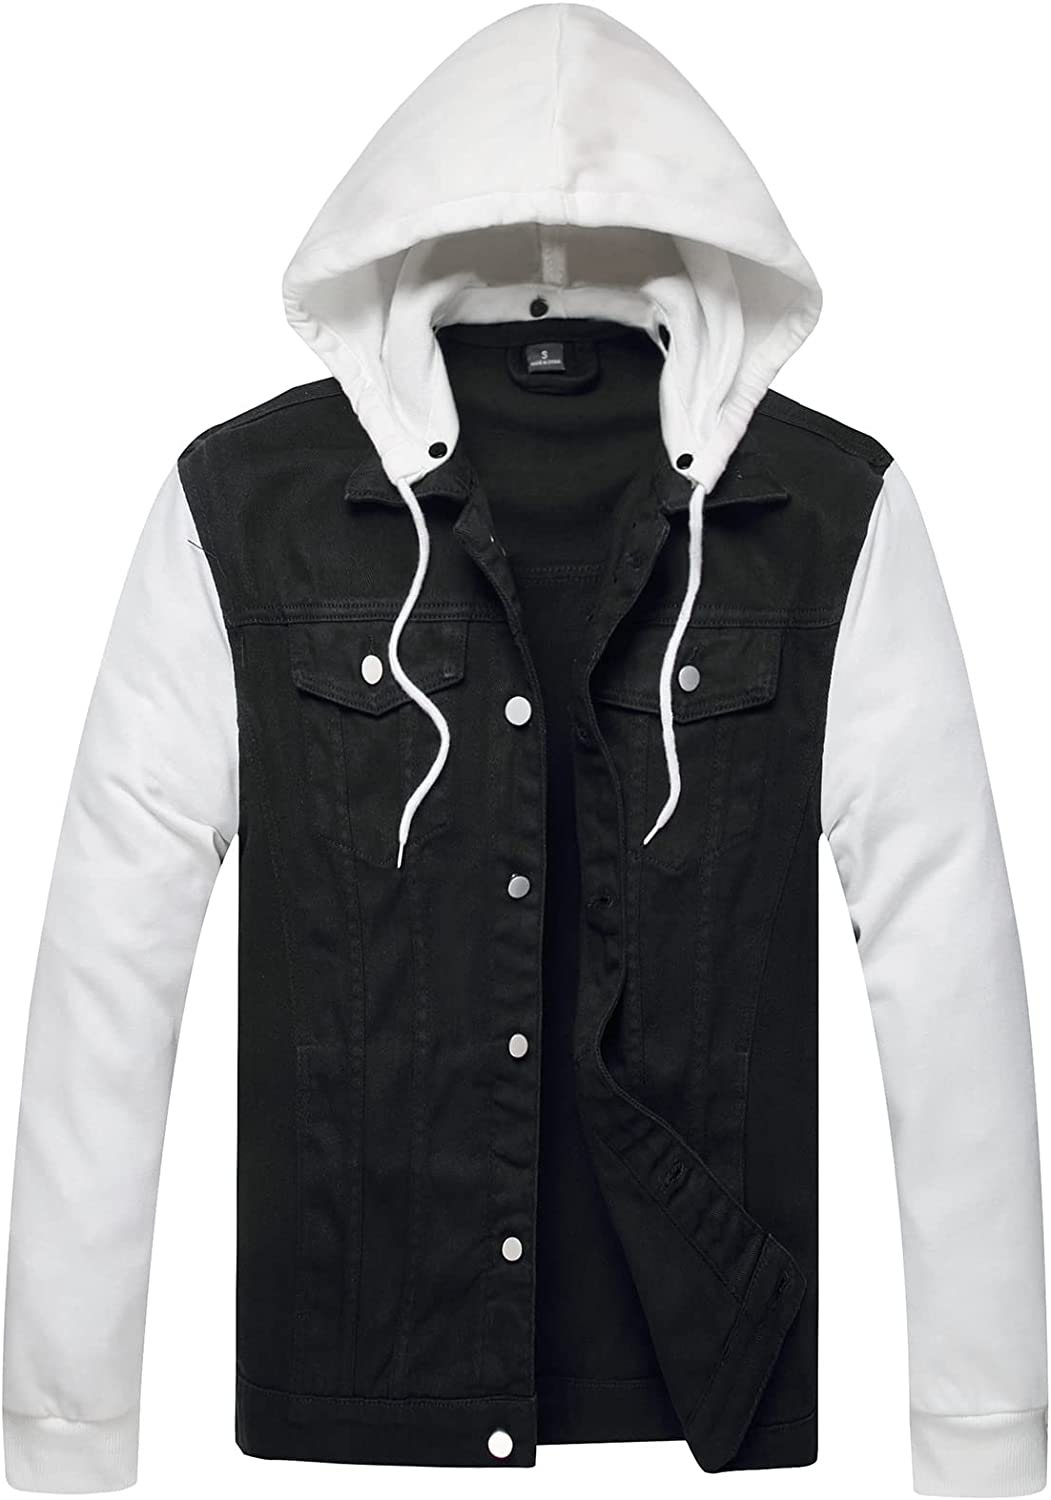 LZLER Men Hoodie Jean Jacket Fashion Denim Jacket with Detachable Hood